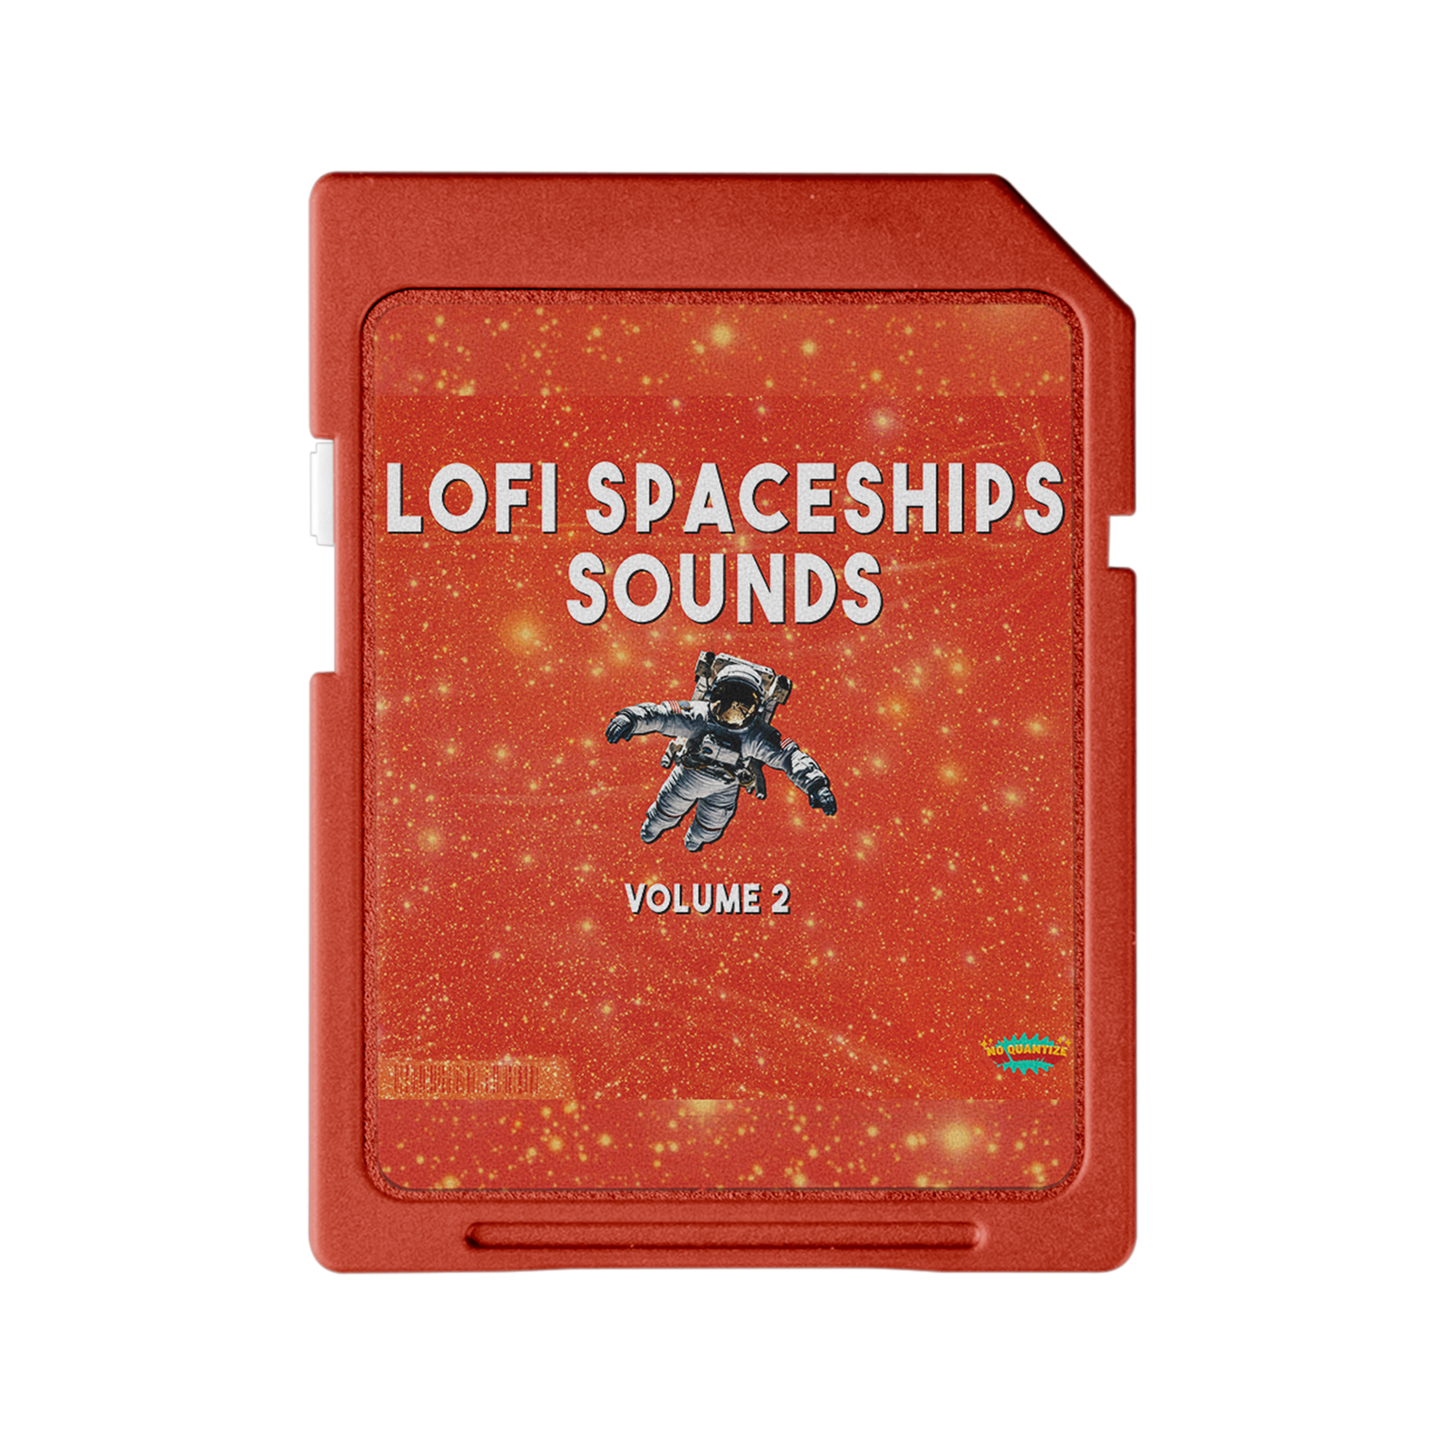 Lo-Fi Spaceship Sounds Volume 2 | 200+ Spaceship Sounds in WAV format (MPC, Maschine, Ableton, FL Studio, Sp-404, Reason, Logic Pro)